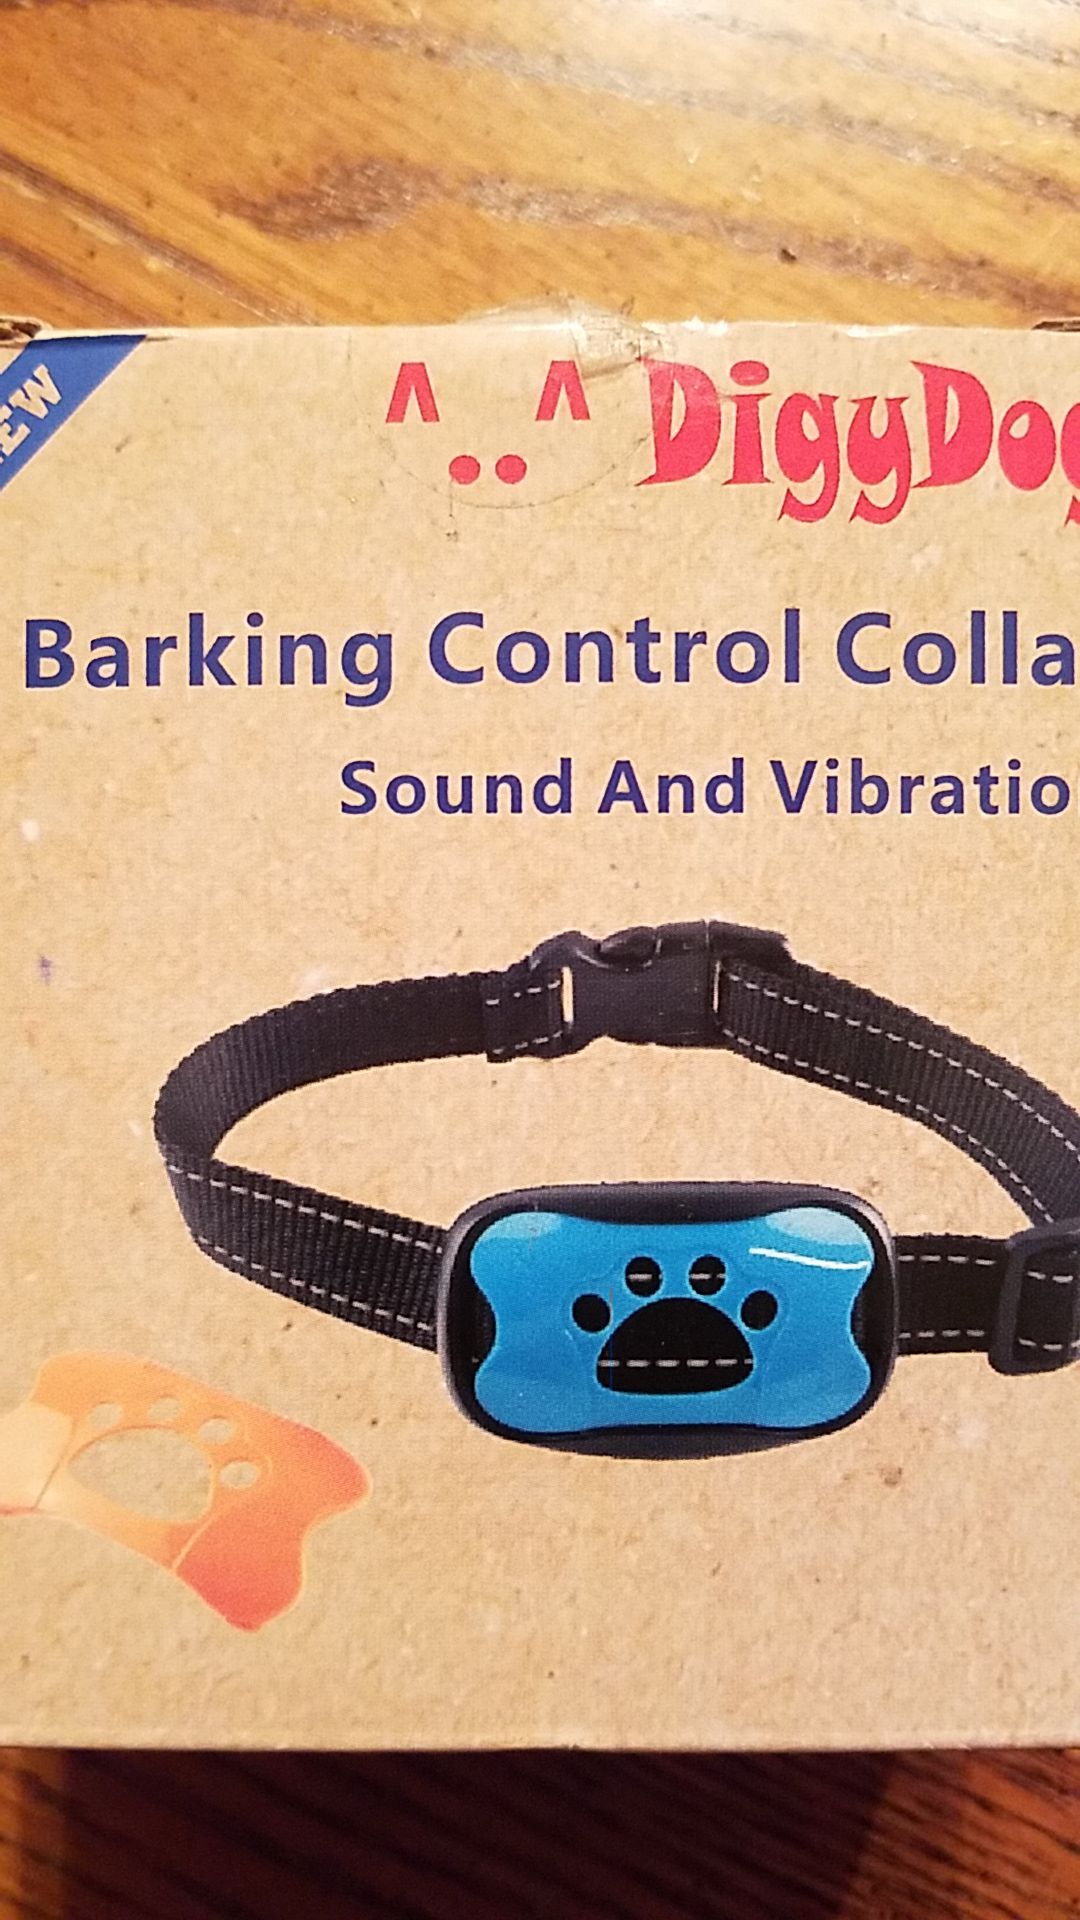 Dog barking control collar